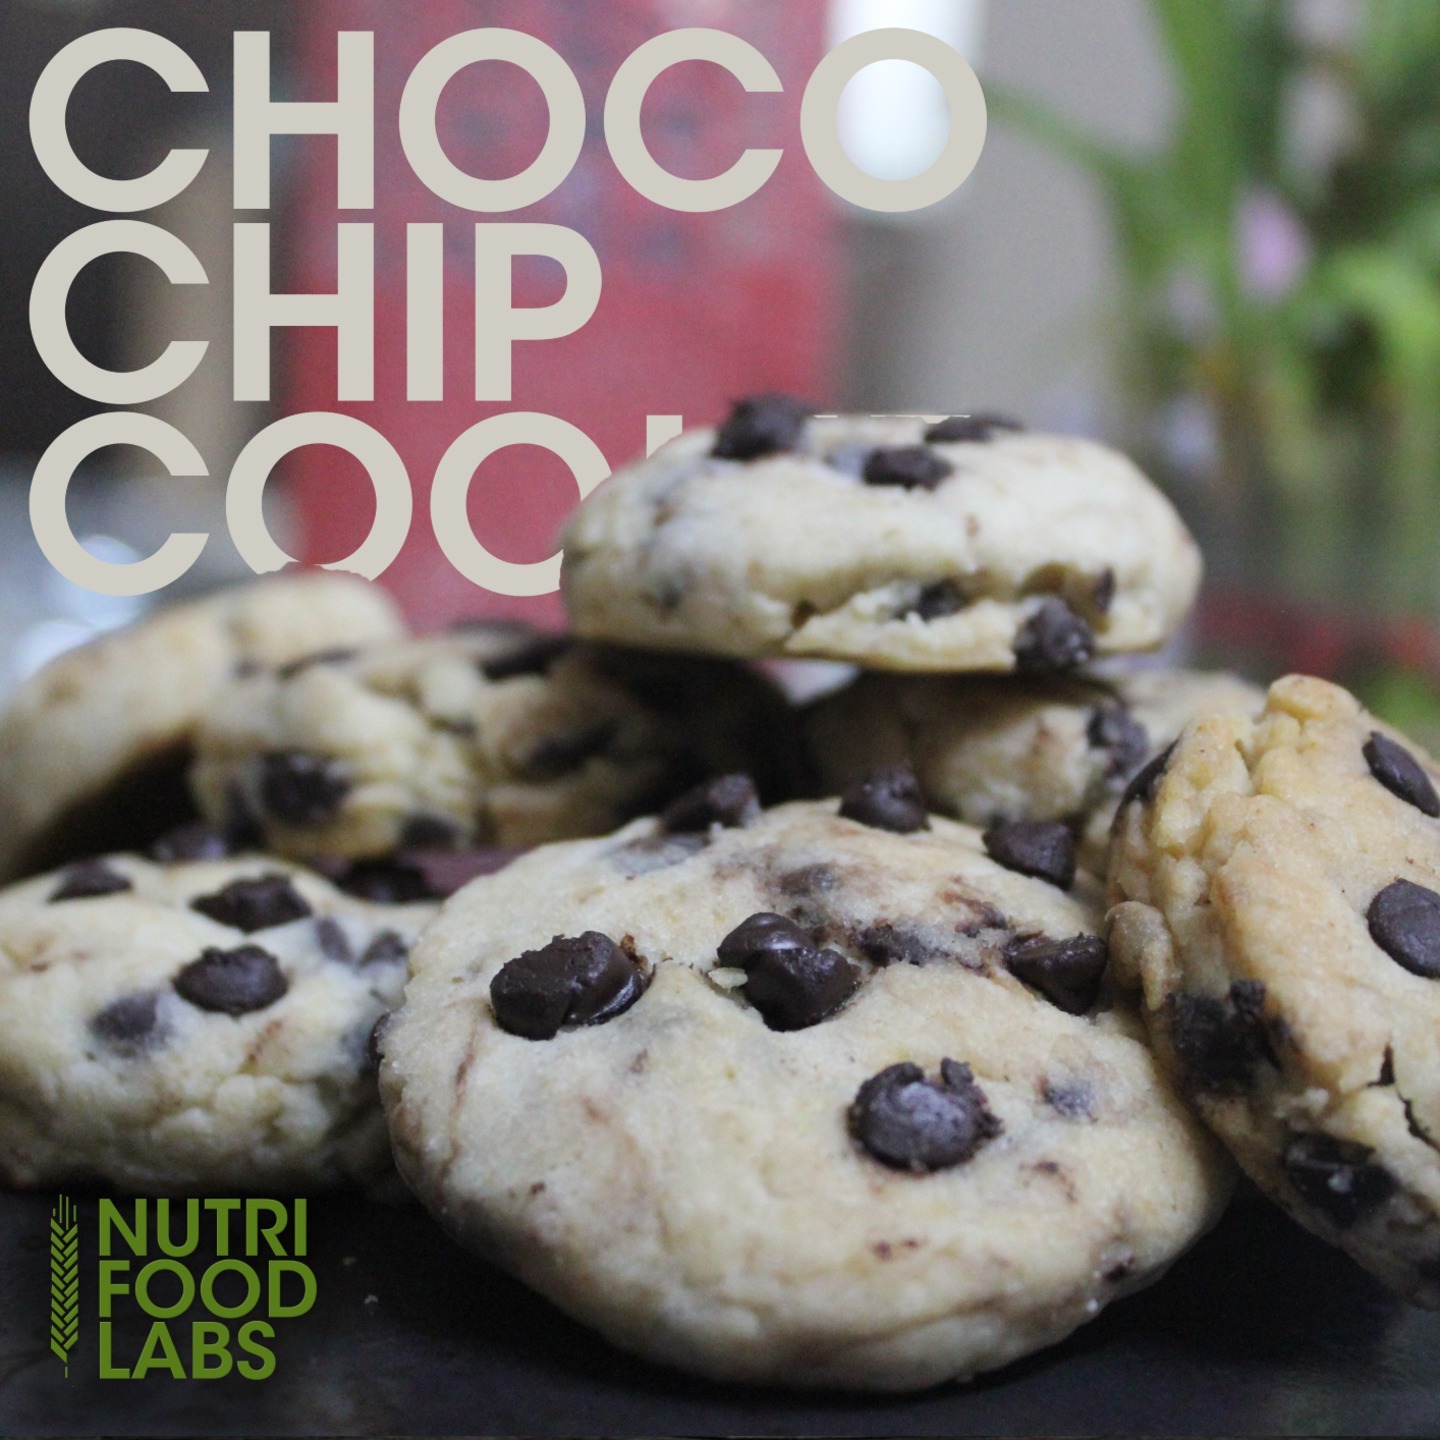 Chocochip Cookies Handmade